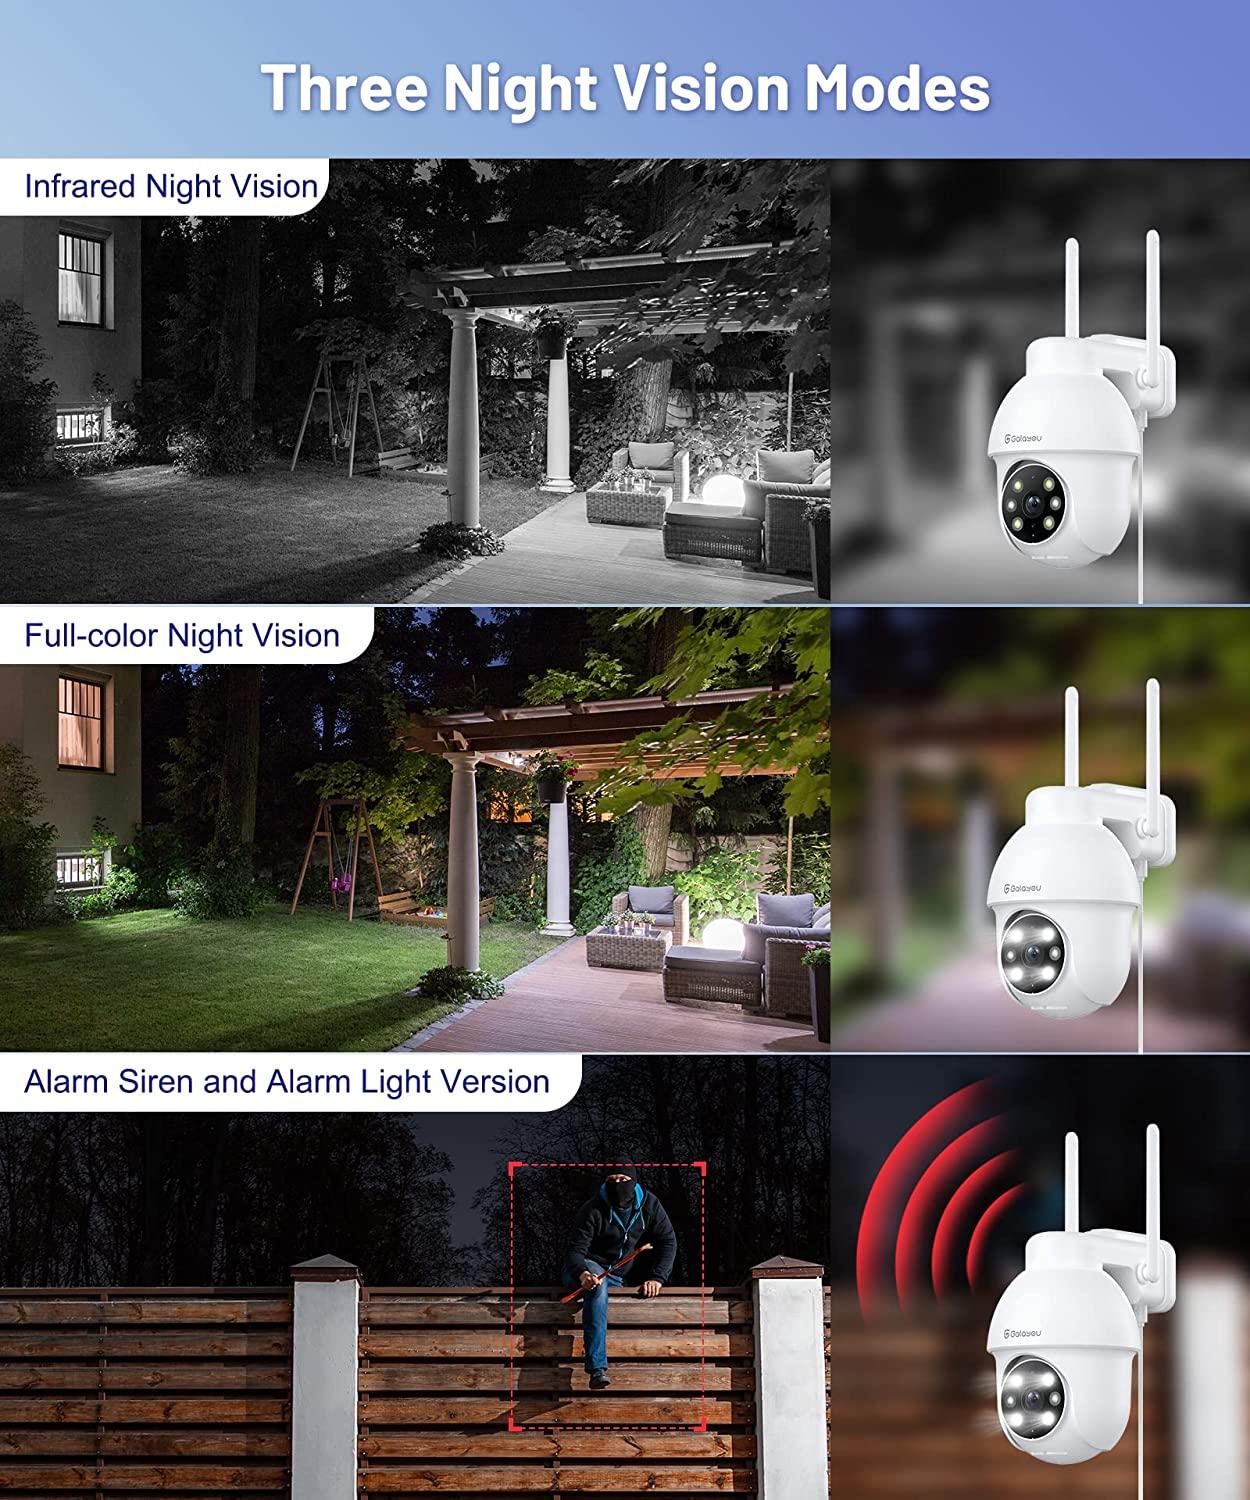 GALAYOU 2K Security Cameras Outdoor, WiFi Home Video Surveillance